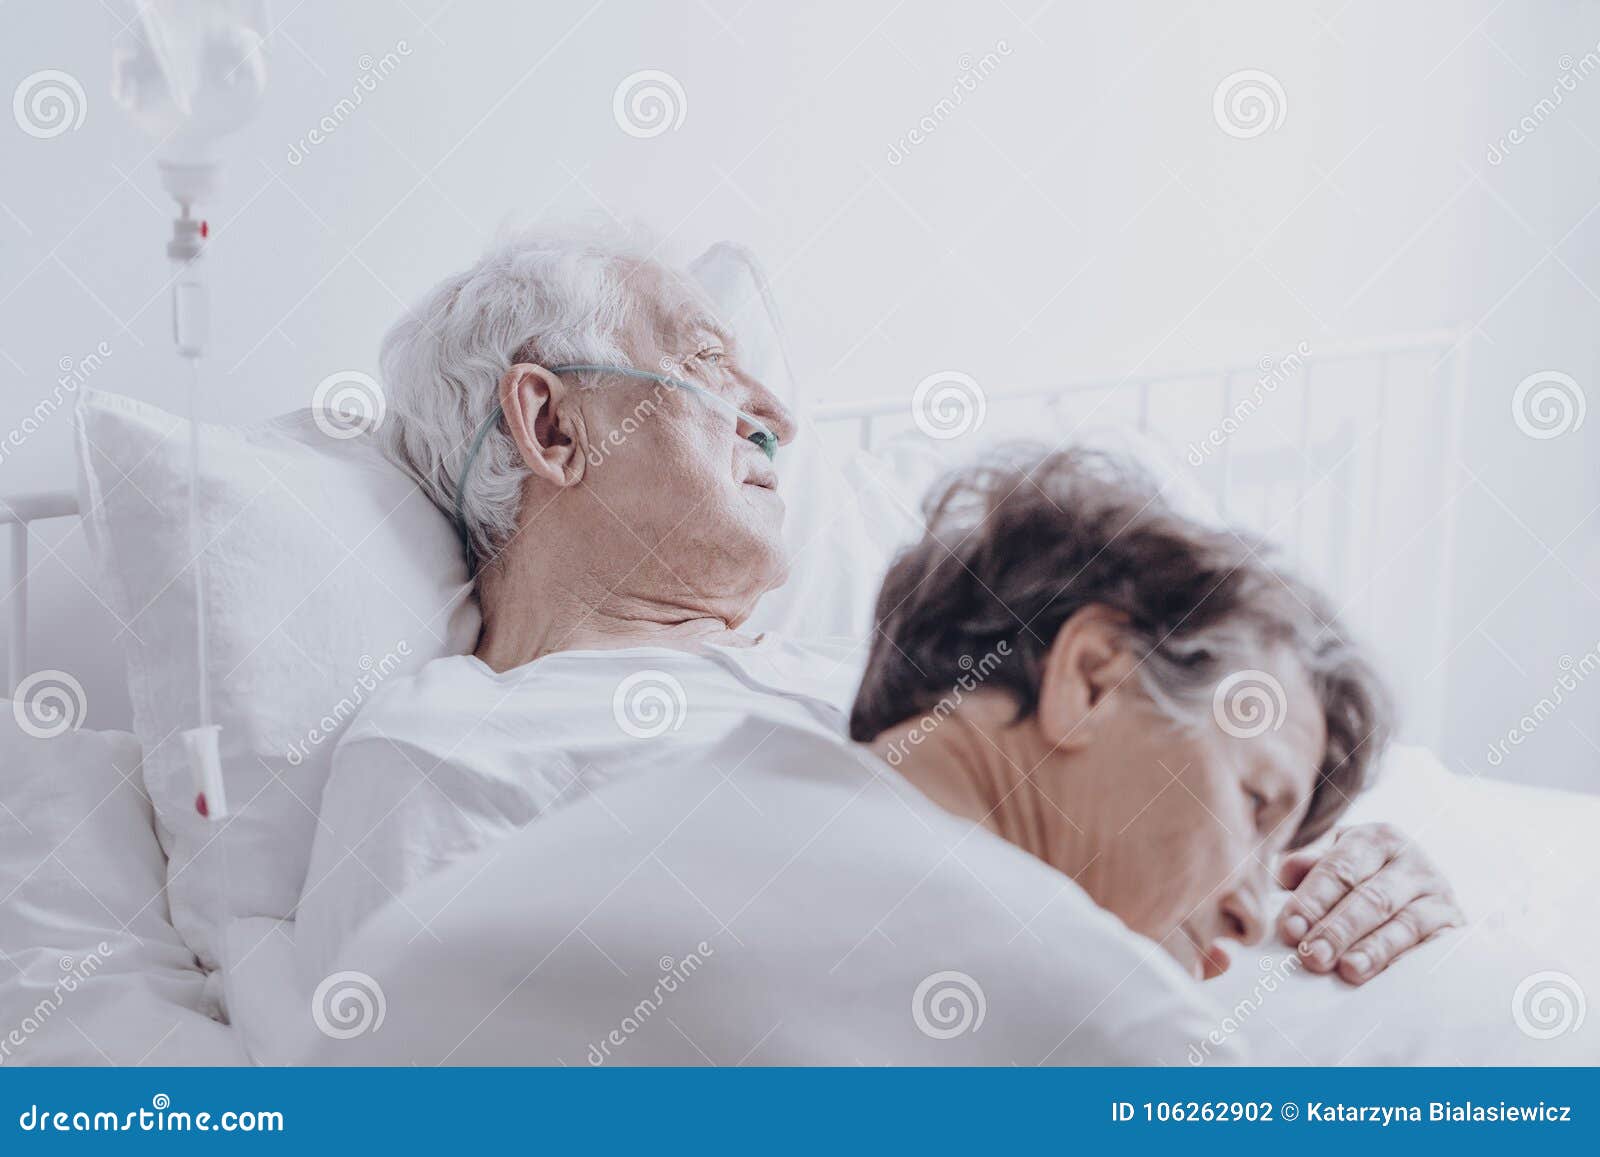 dying elderly man at hospital